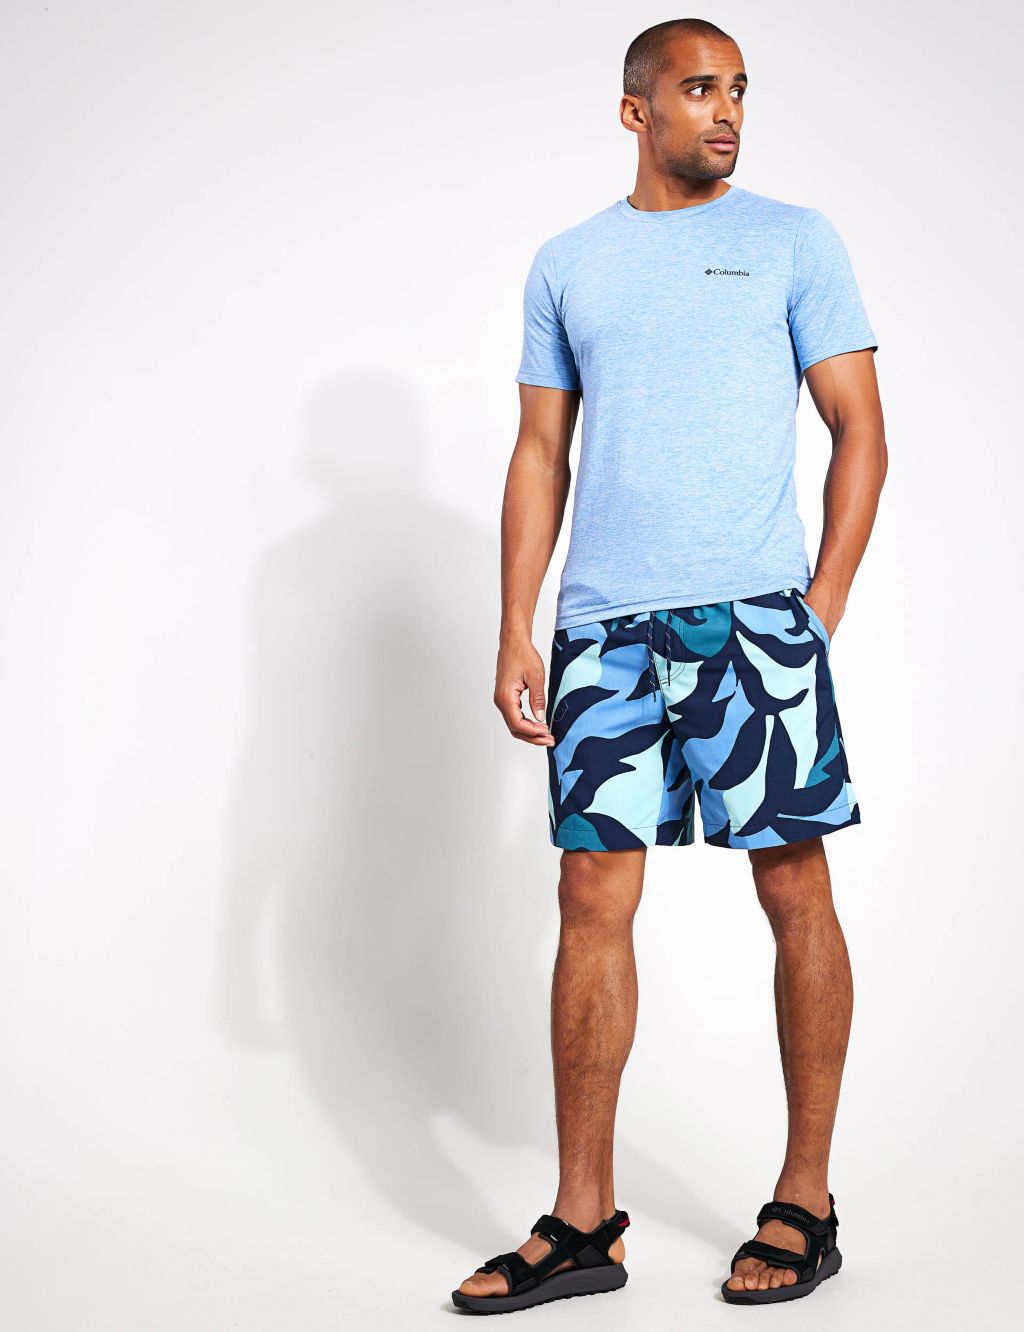 Summerdry Printed Shorts 1 of 5